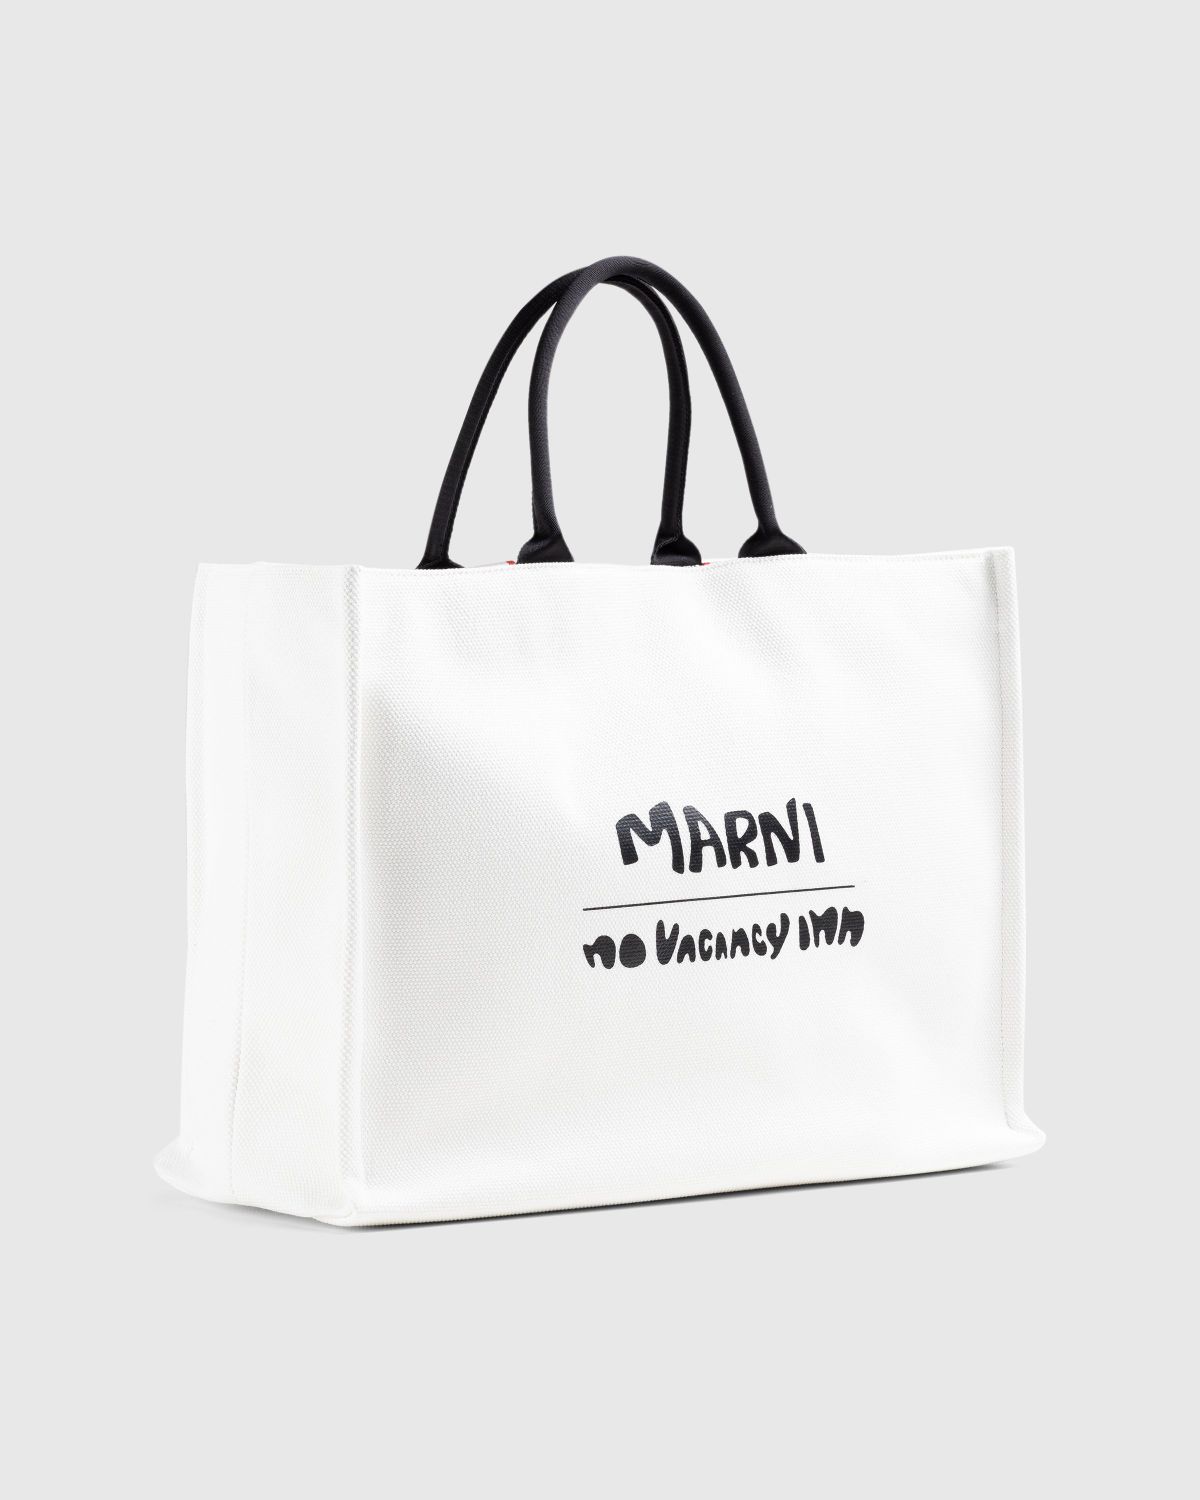 Marni x No Vacancy Inn – Bey Tote Bag Shell/Black - Bags - White - Image 3